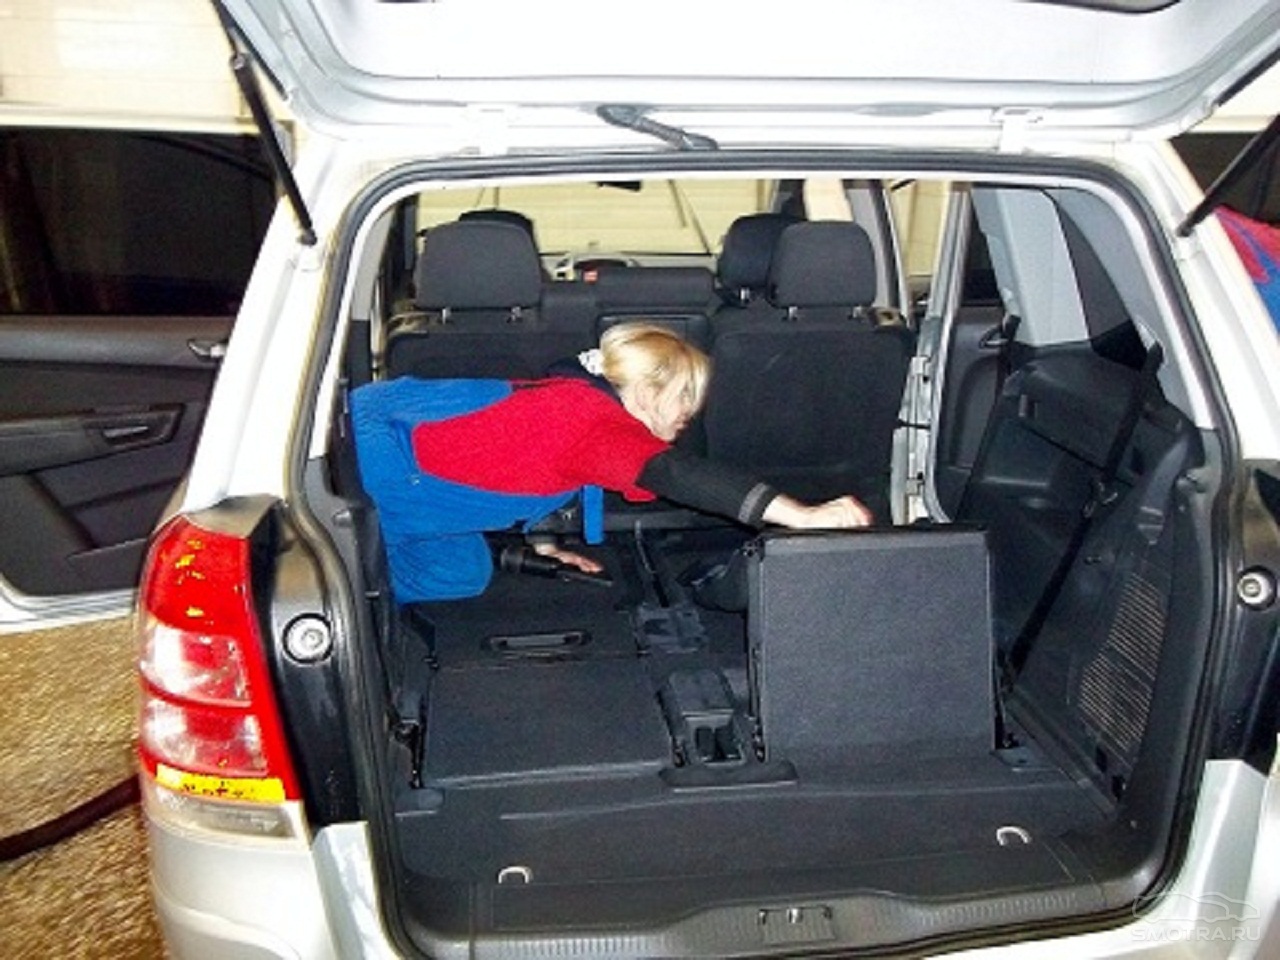 Opel zafira багажник. Спальное место в багажнике Опель Зафира б. Zafira b размер багажника. Зафира а черная багажник. Открывает багажник.